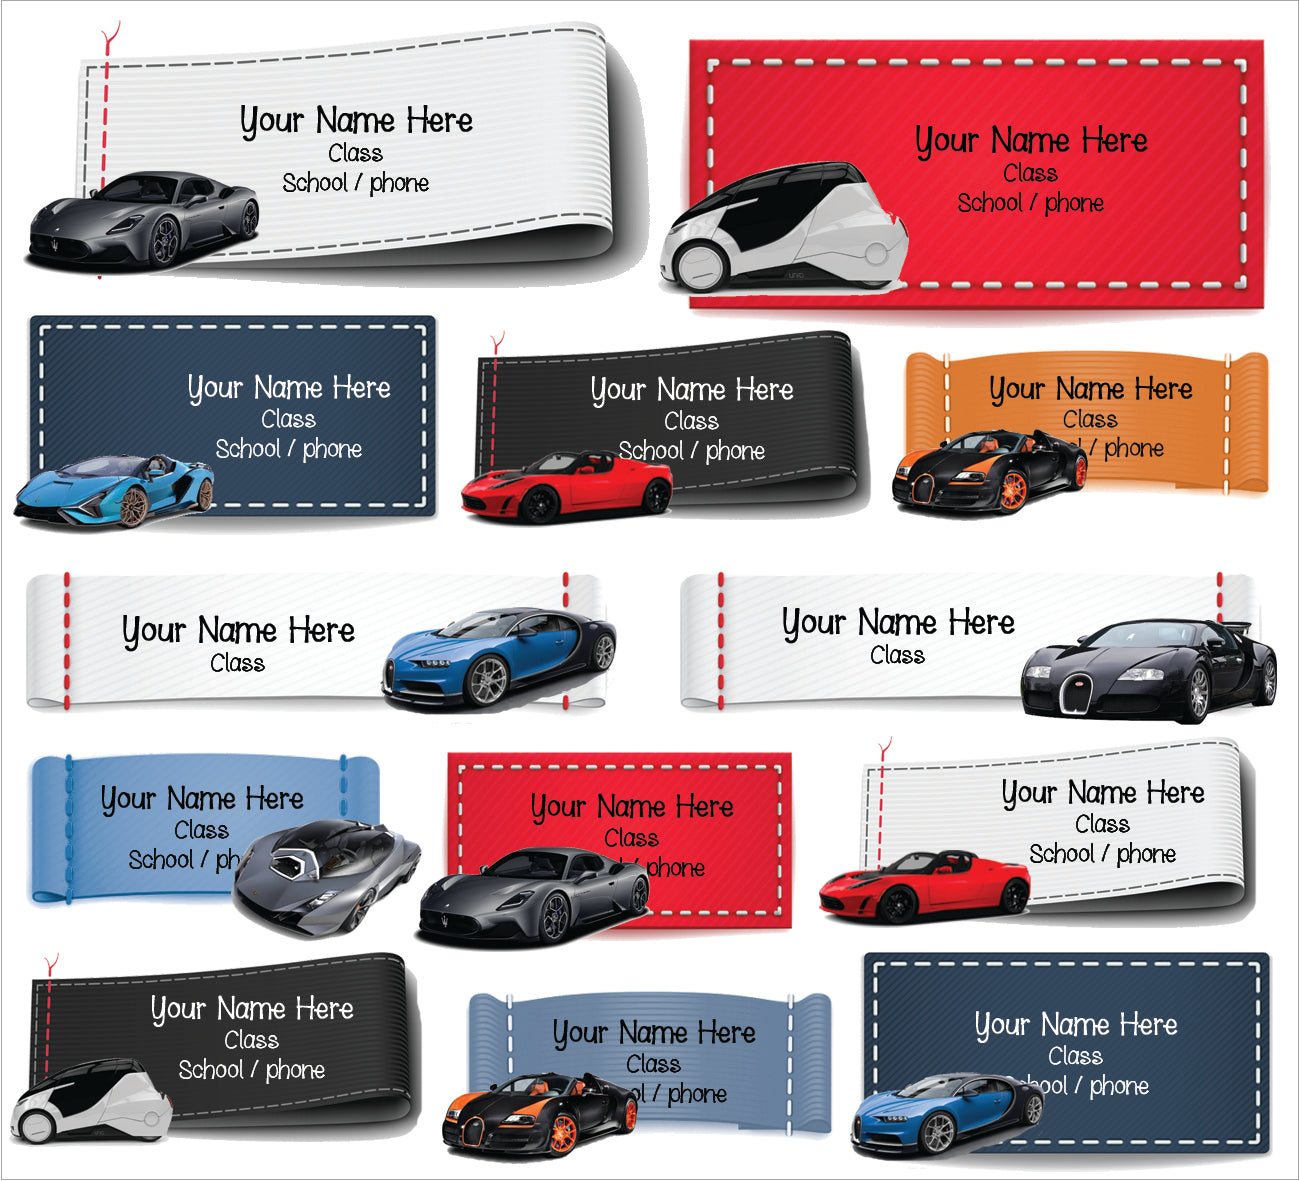 ""Cool cars" School labels packs